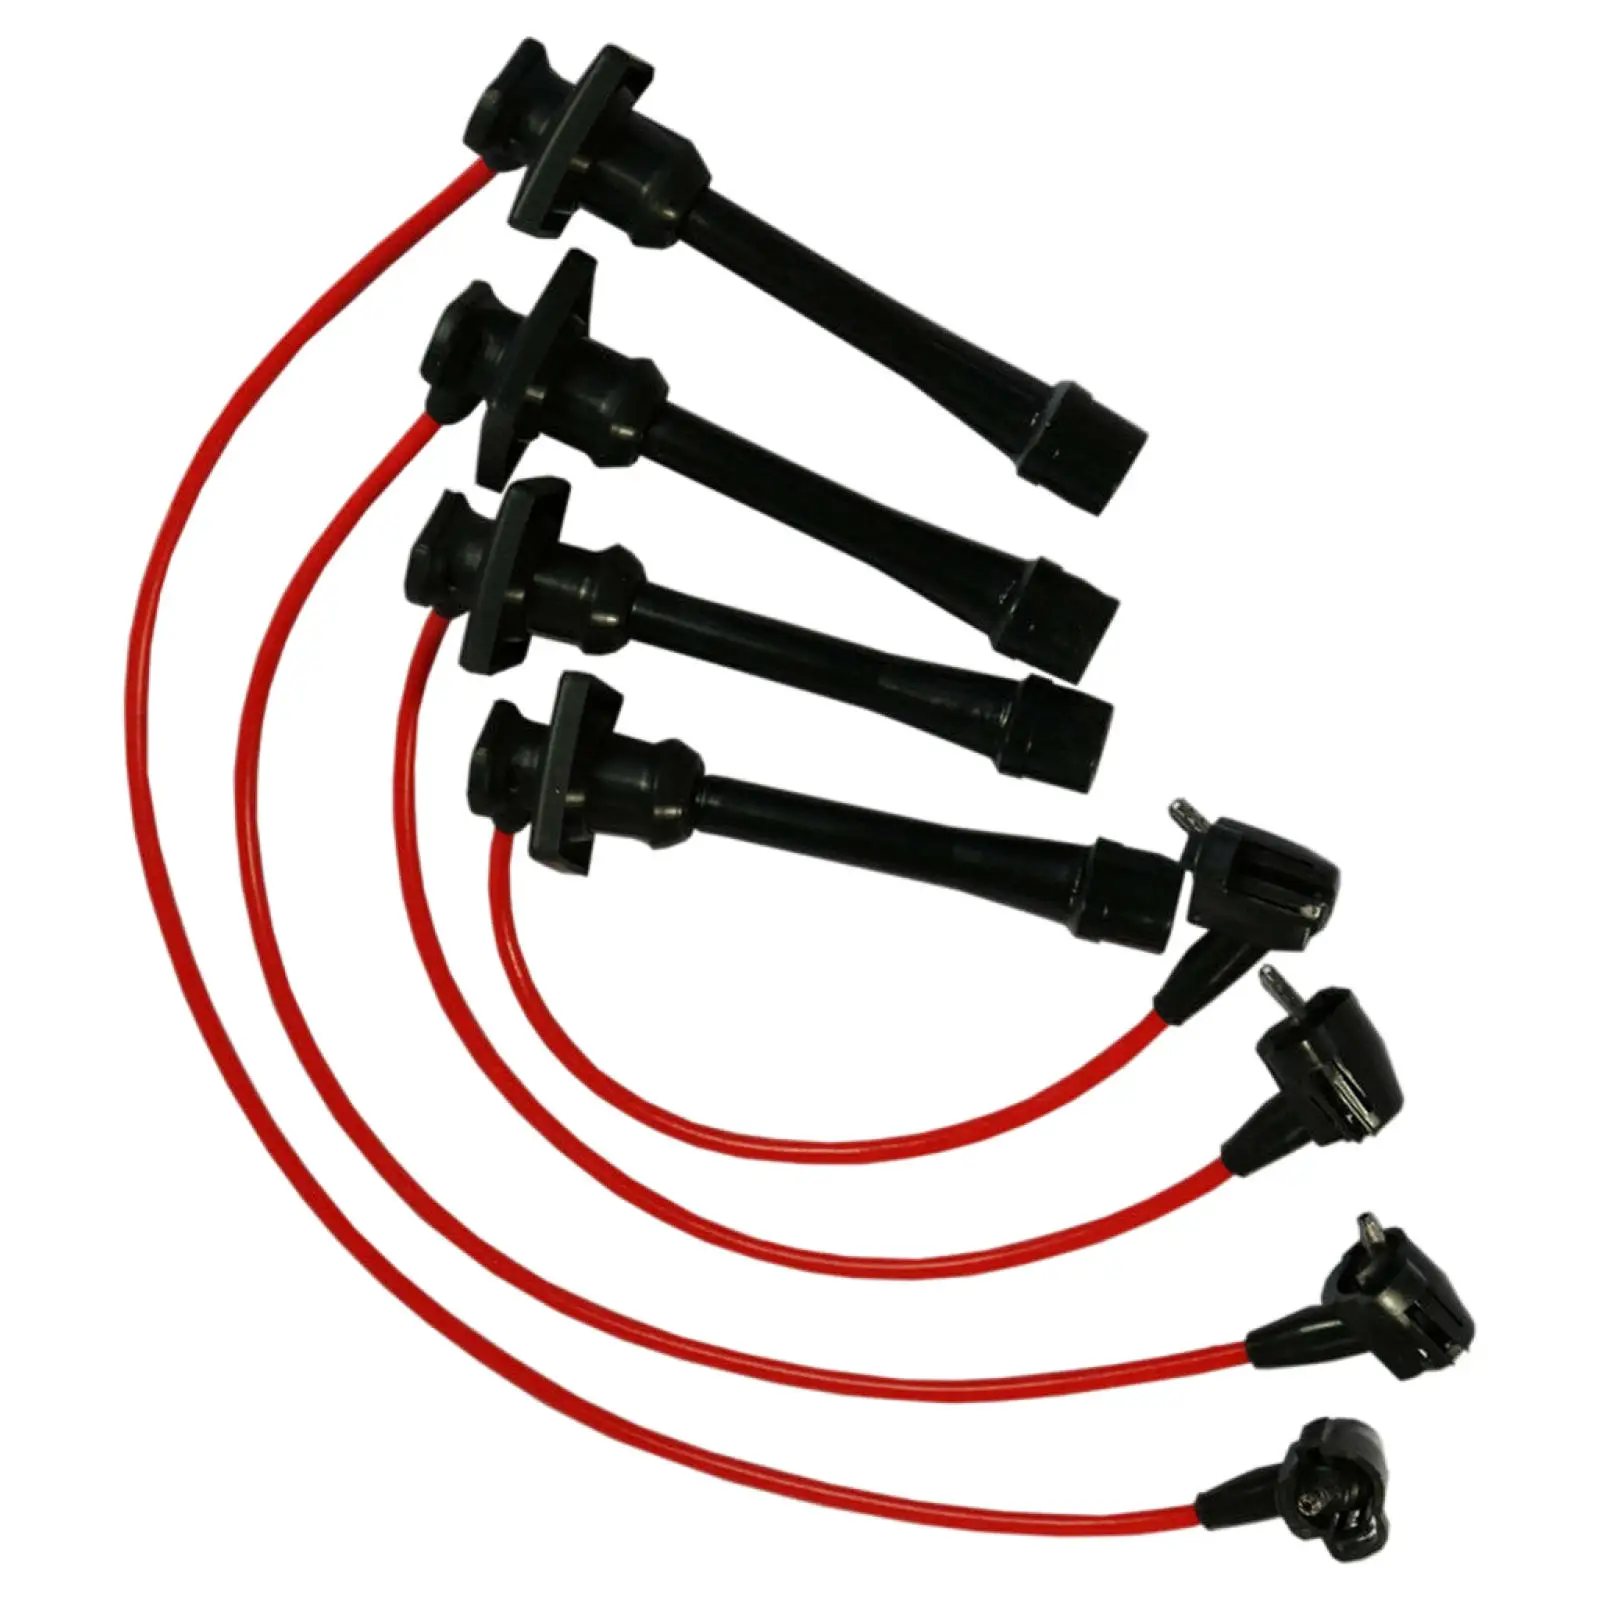 4Pcs/Set Spark Plug Wires Set 90919-22327 for Toyota Corolla 1.6L 1.8L 1993-1997